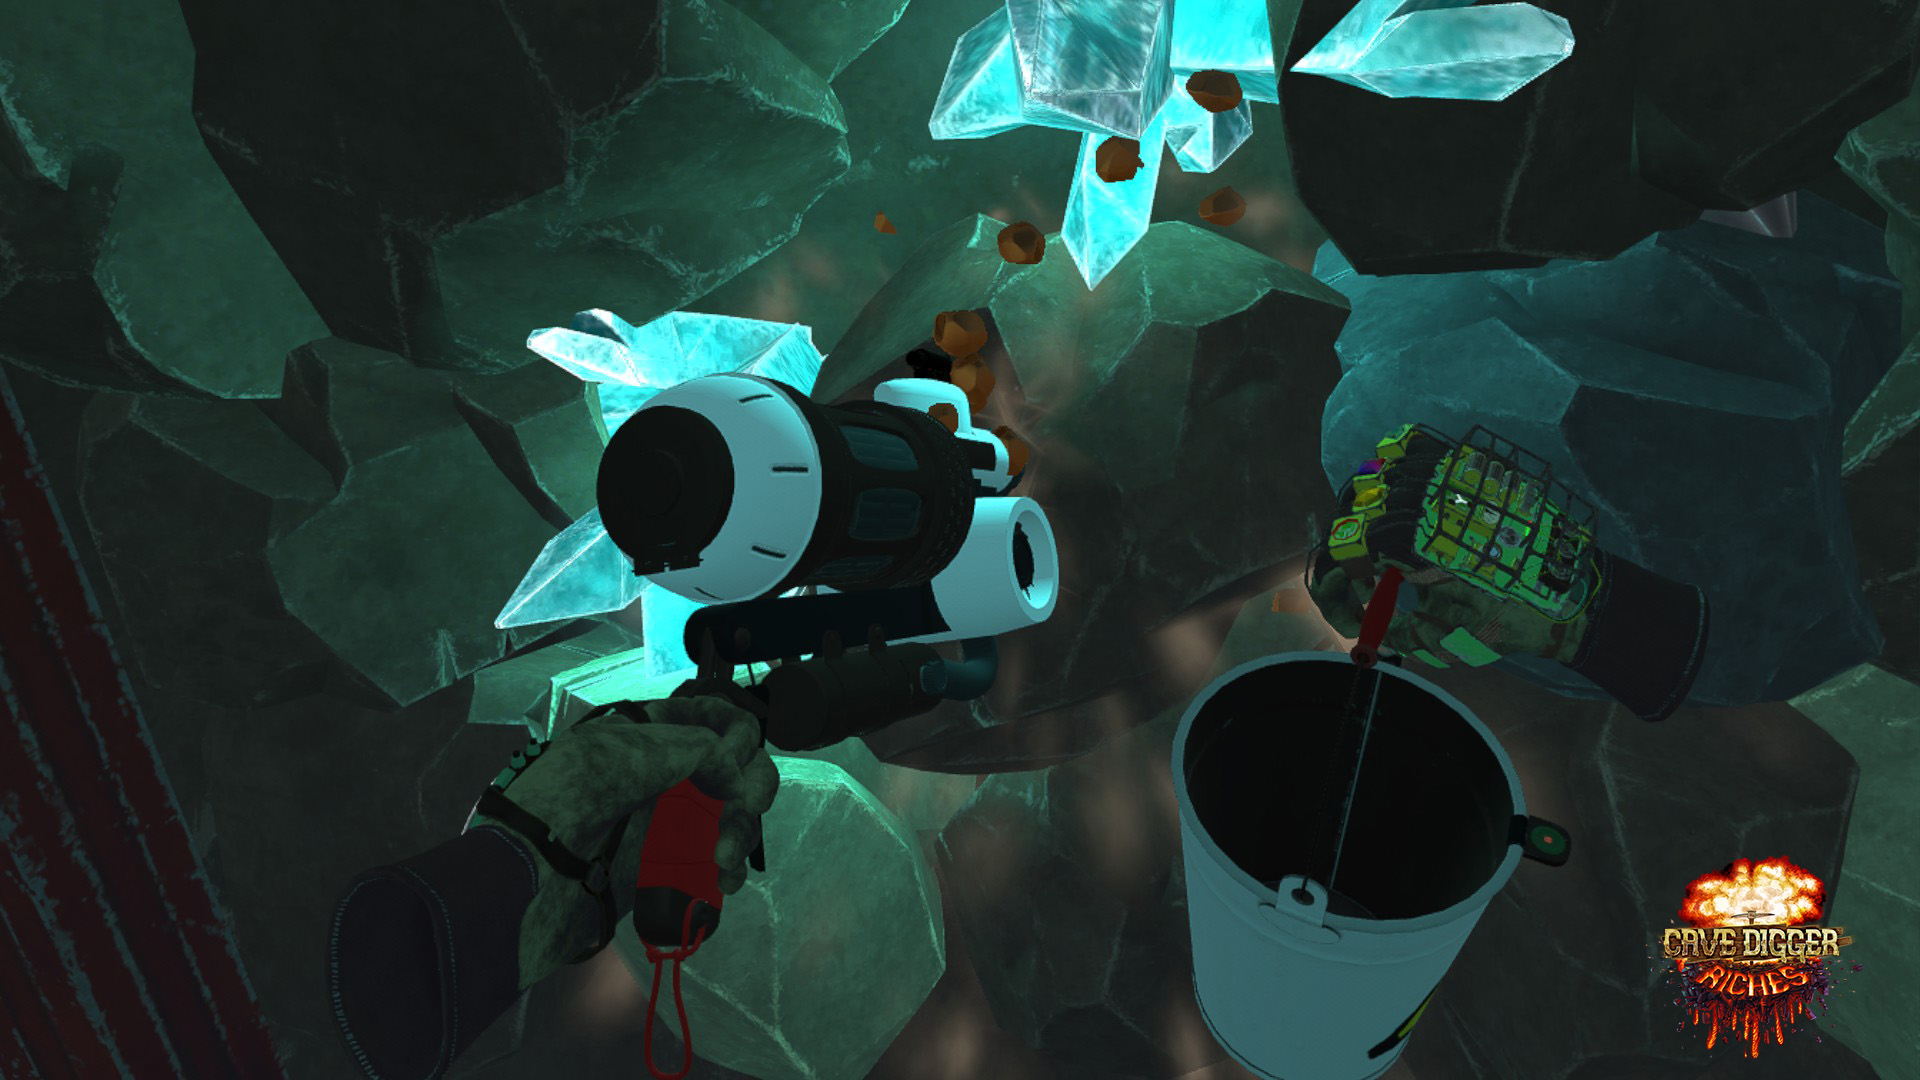 Cave Digger: Riches DLC screenshot